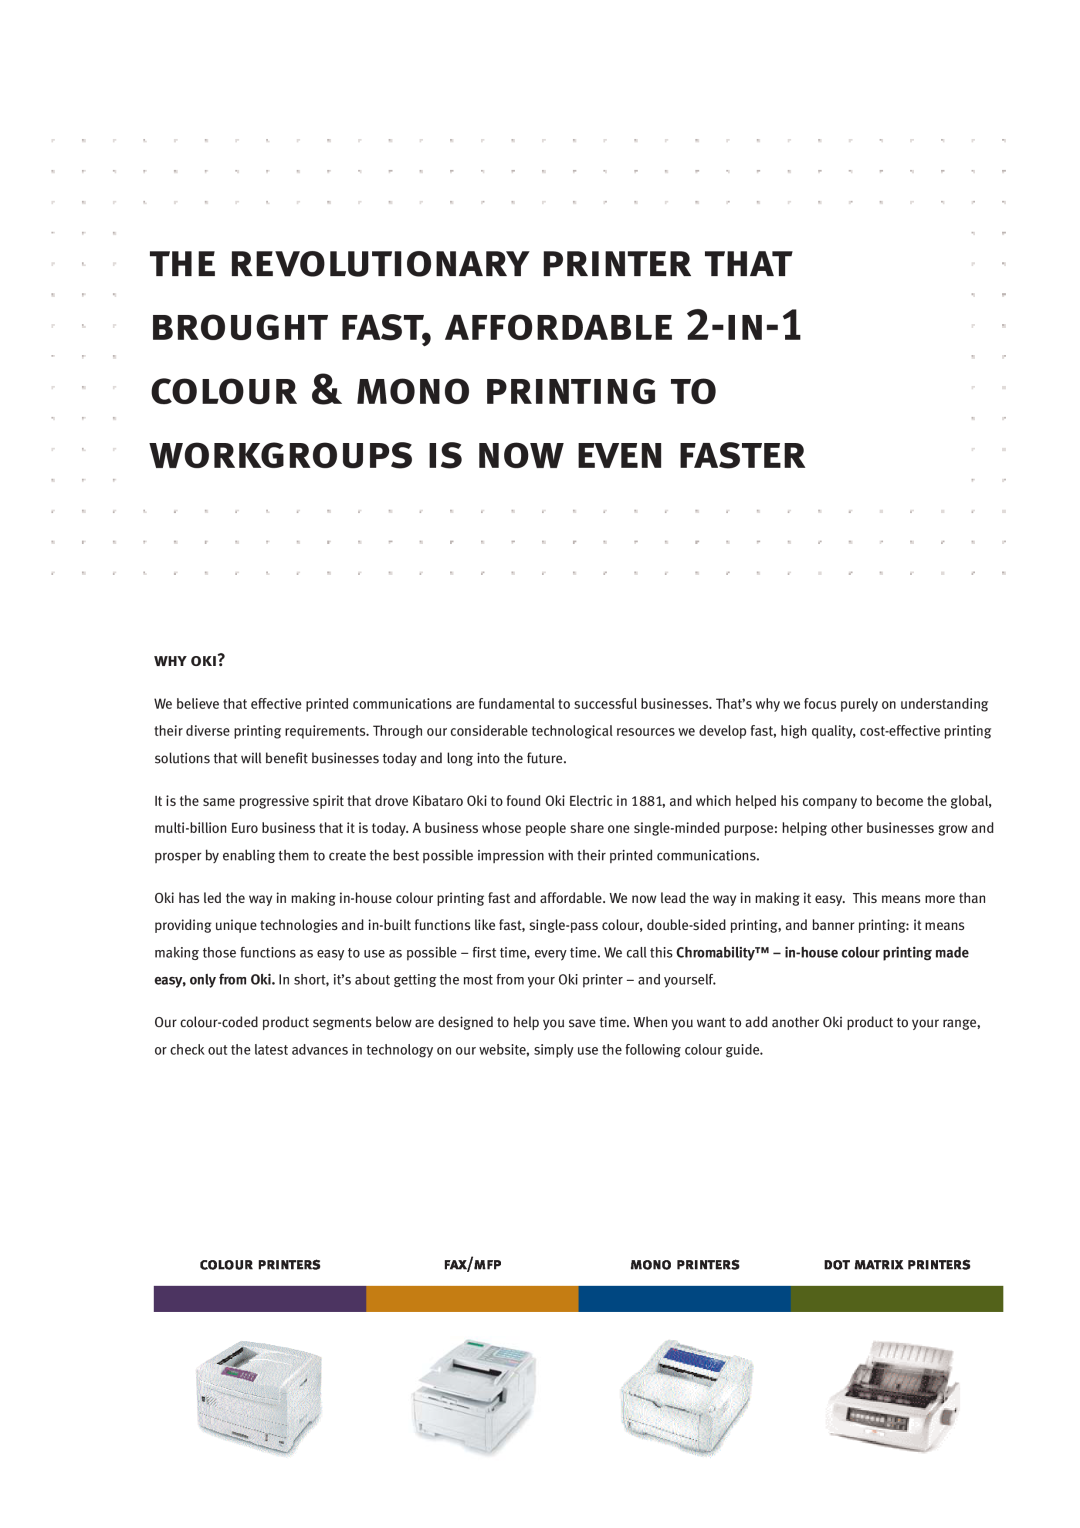 Oki C5000 manual why oki?, colour printers, fax/mfp, mono printers, dot matrix printers 